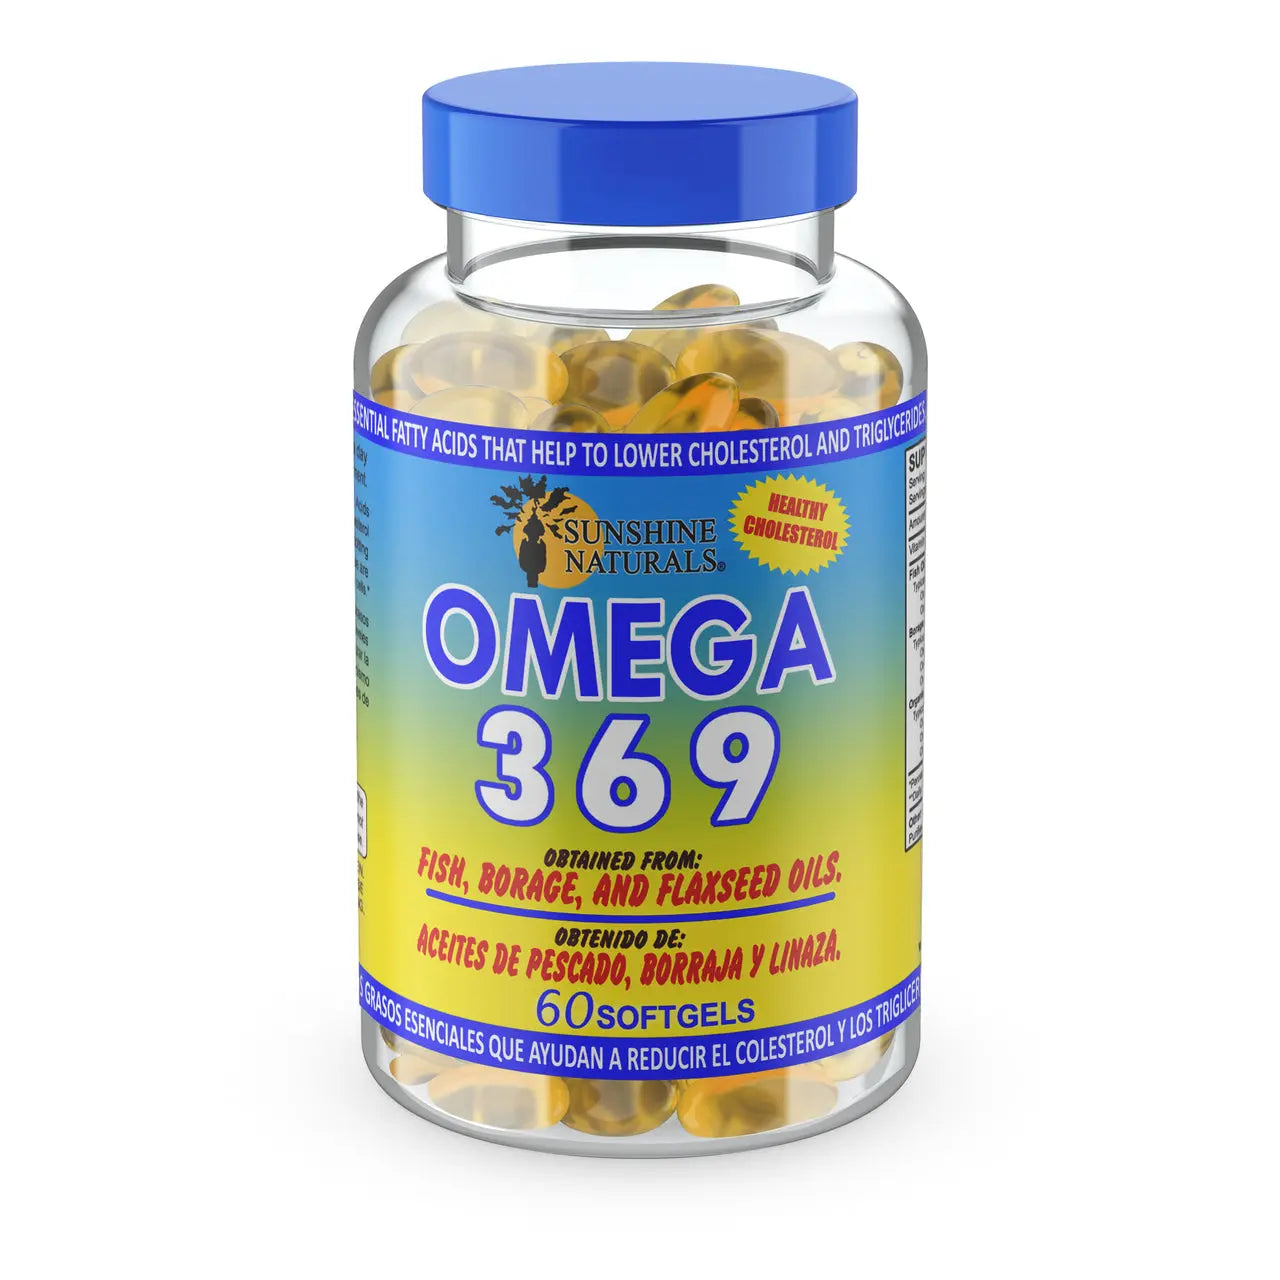 Omega 3-6-9 Fish, Borage, and Flaxseed oil 3600mg 60 Softgels Sunshine naturals